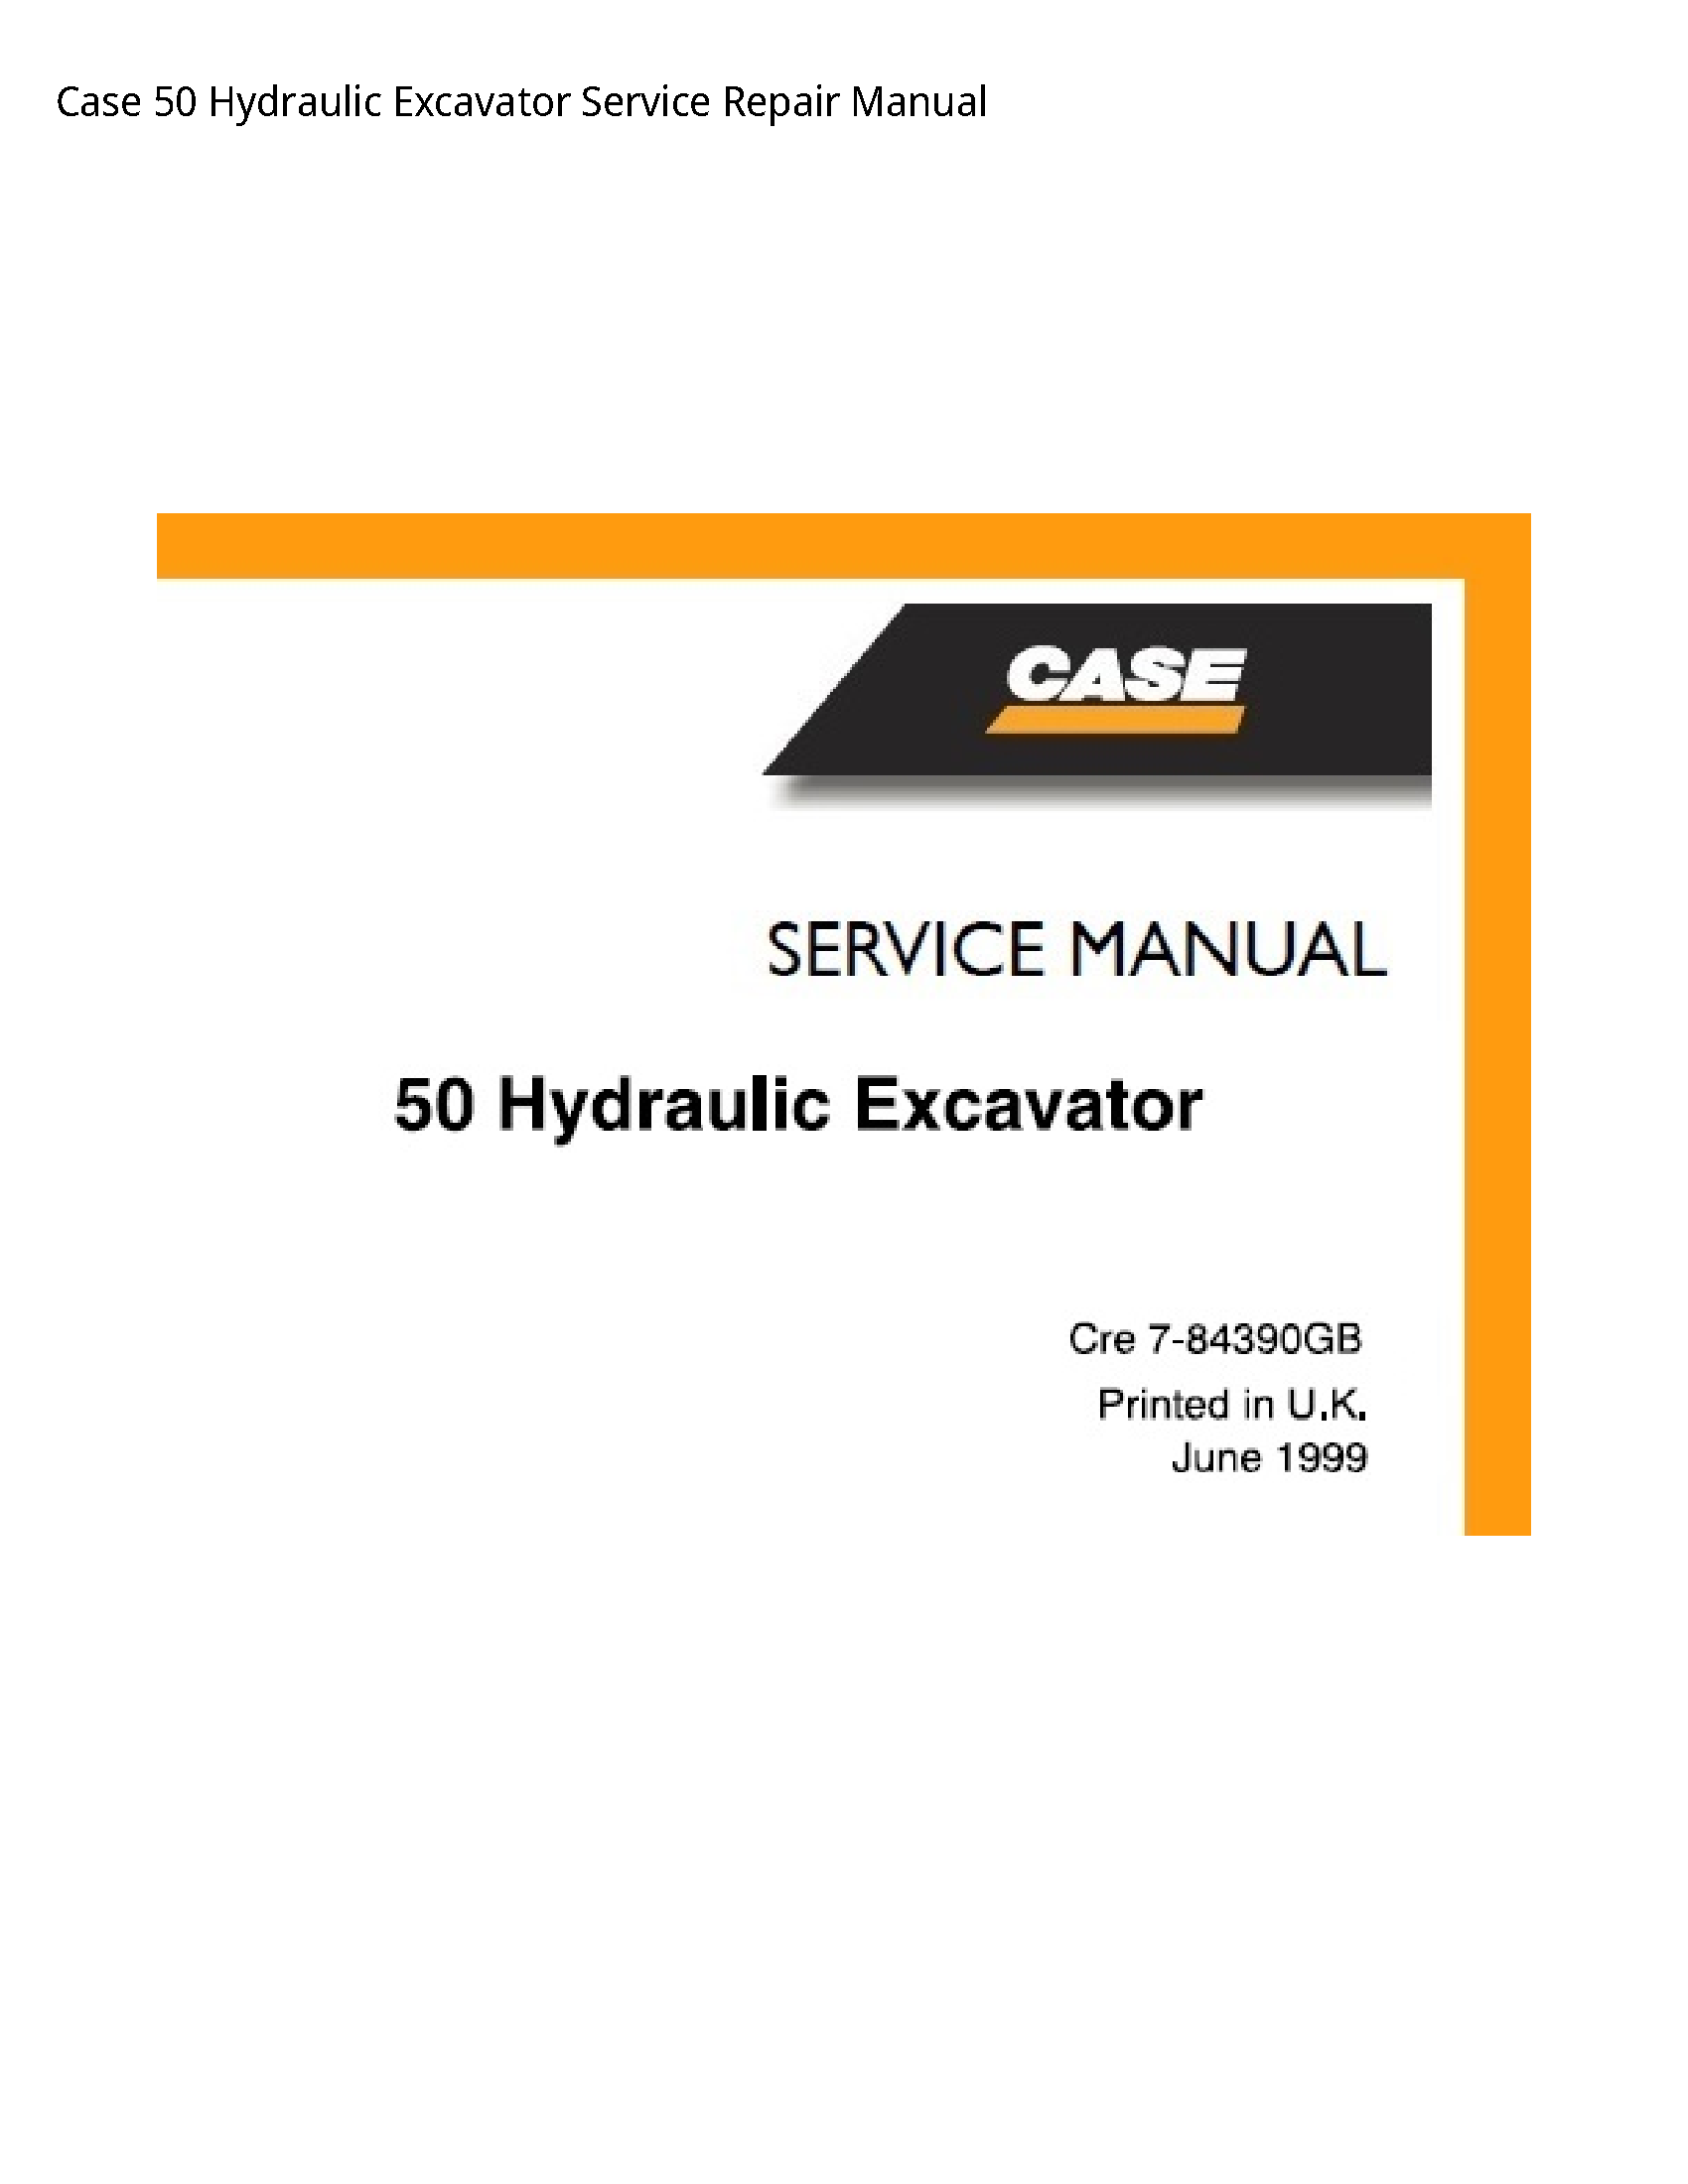 Case/Case IH 50 Hydraulic Excavator manual